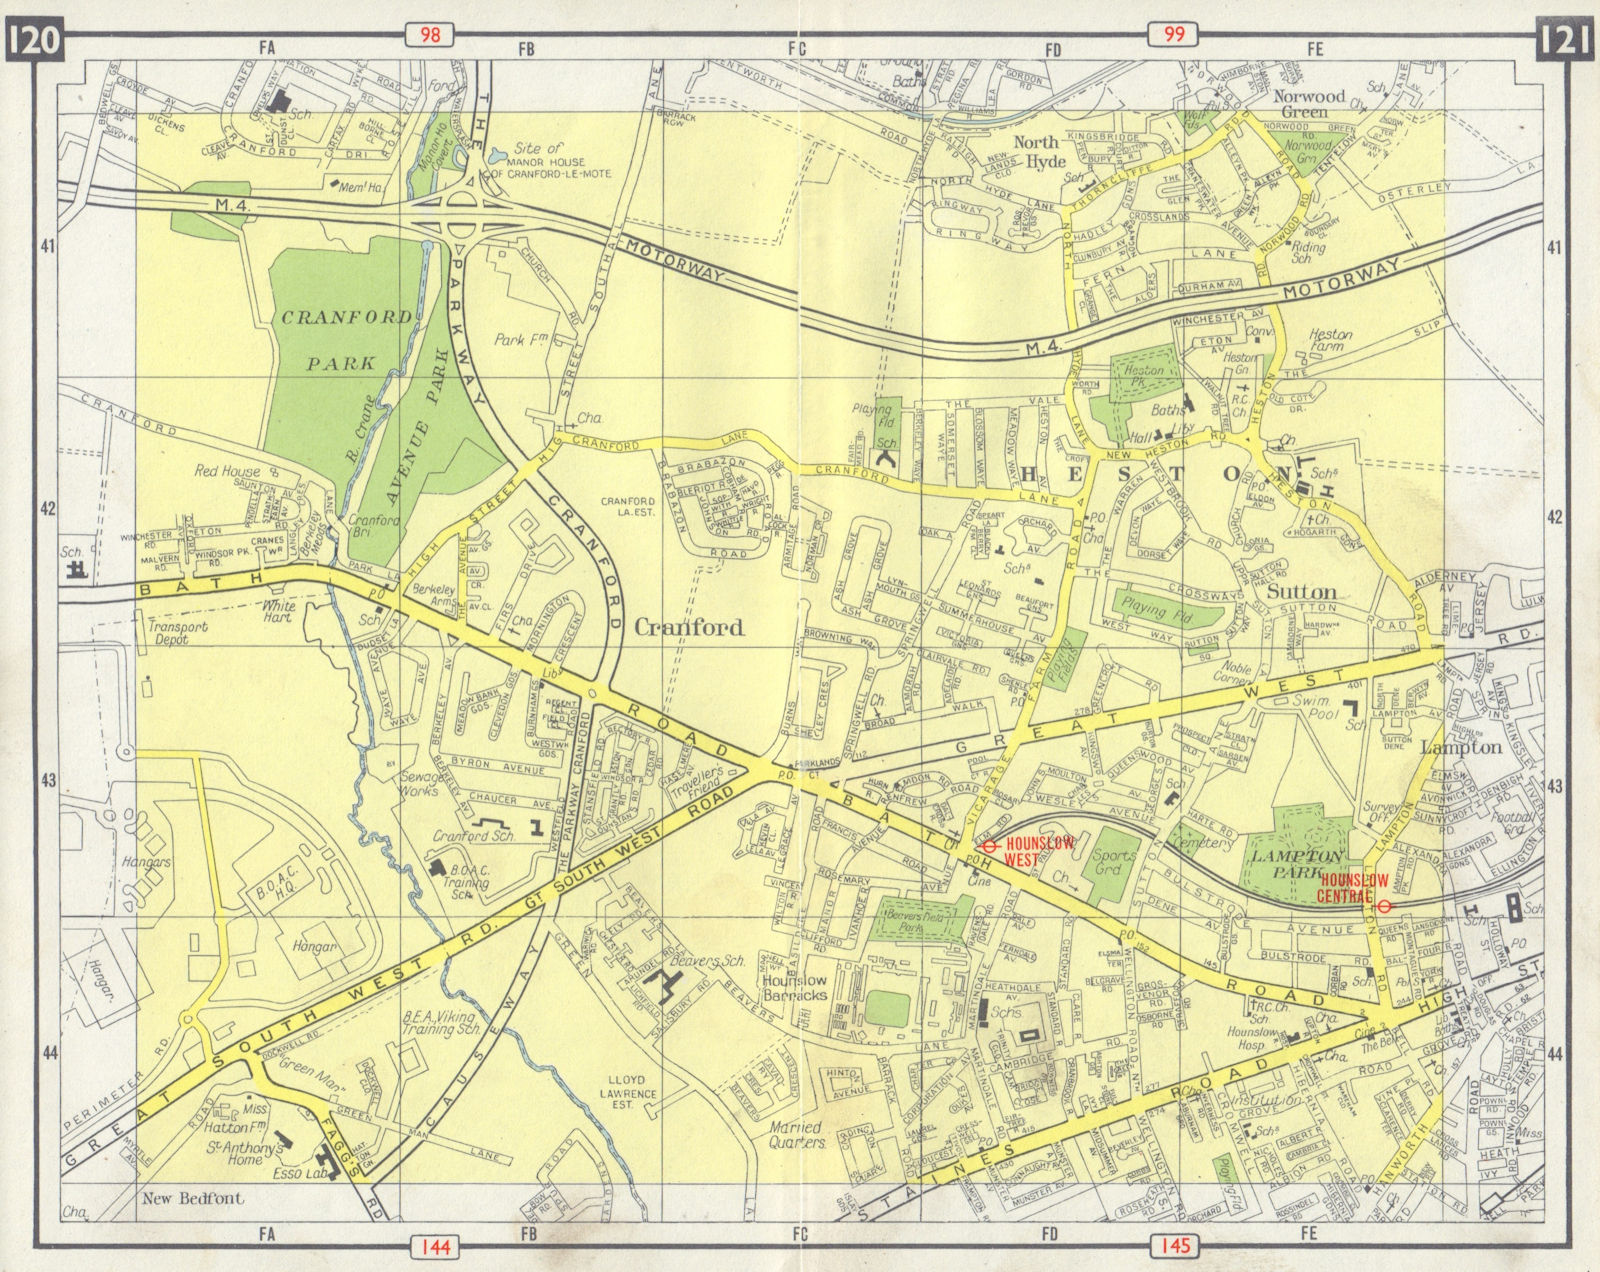 SW LONDON Hounslow Heston Cranford New Bedfont Sutton Heathrow M4 open 1965 map